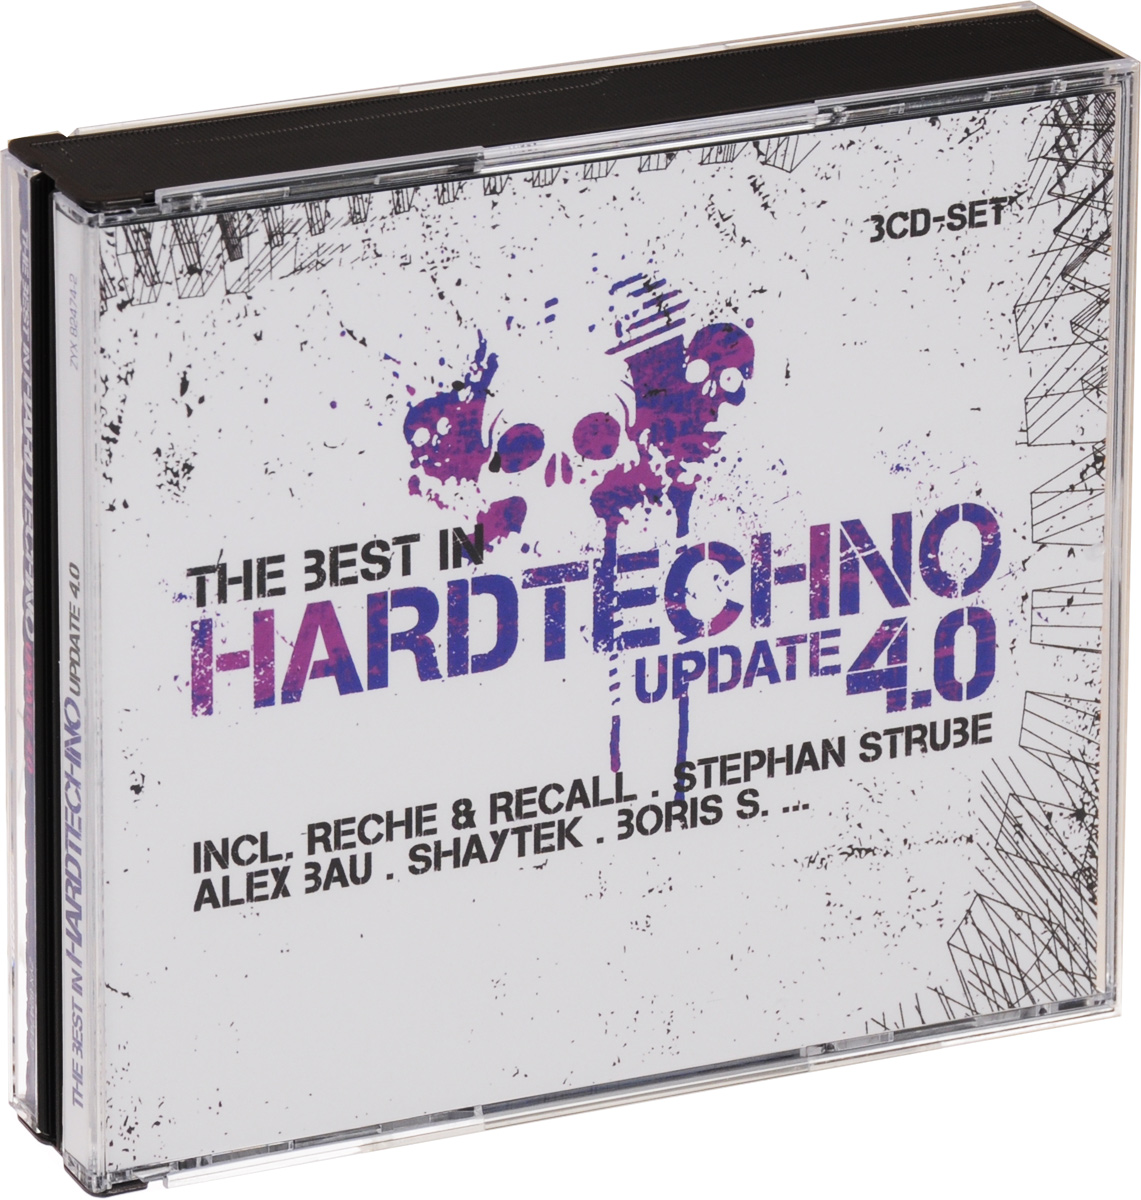 The Best In Hardtechno. Update 4.0 (3 CD)